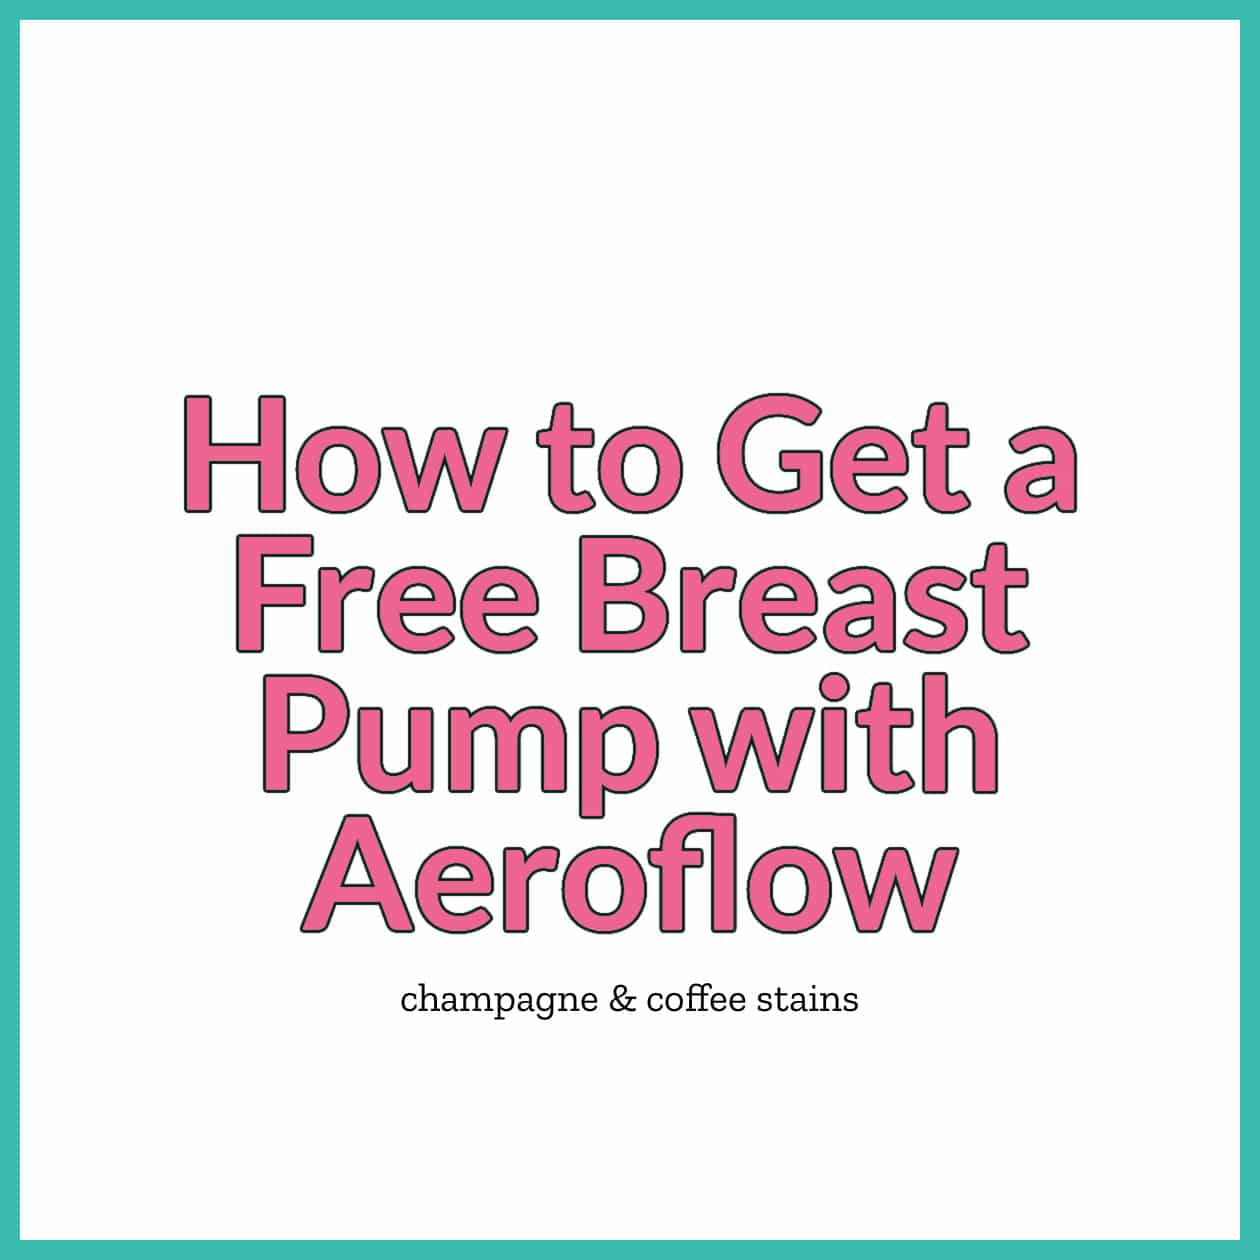 Is Aeroflow Legit? My Experience Ordering a Breast Pump